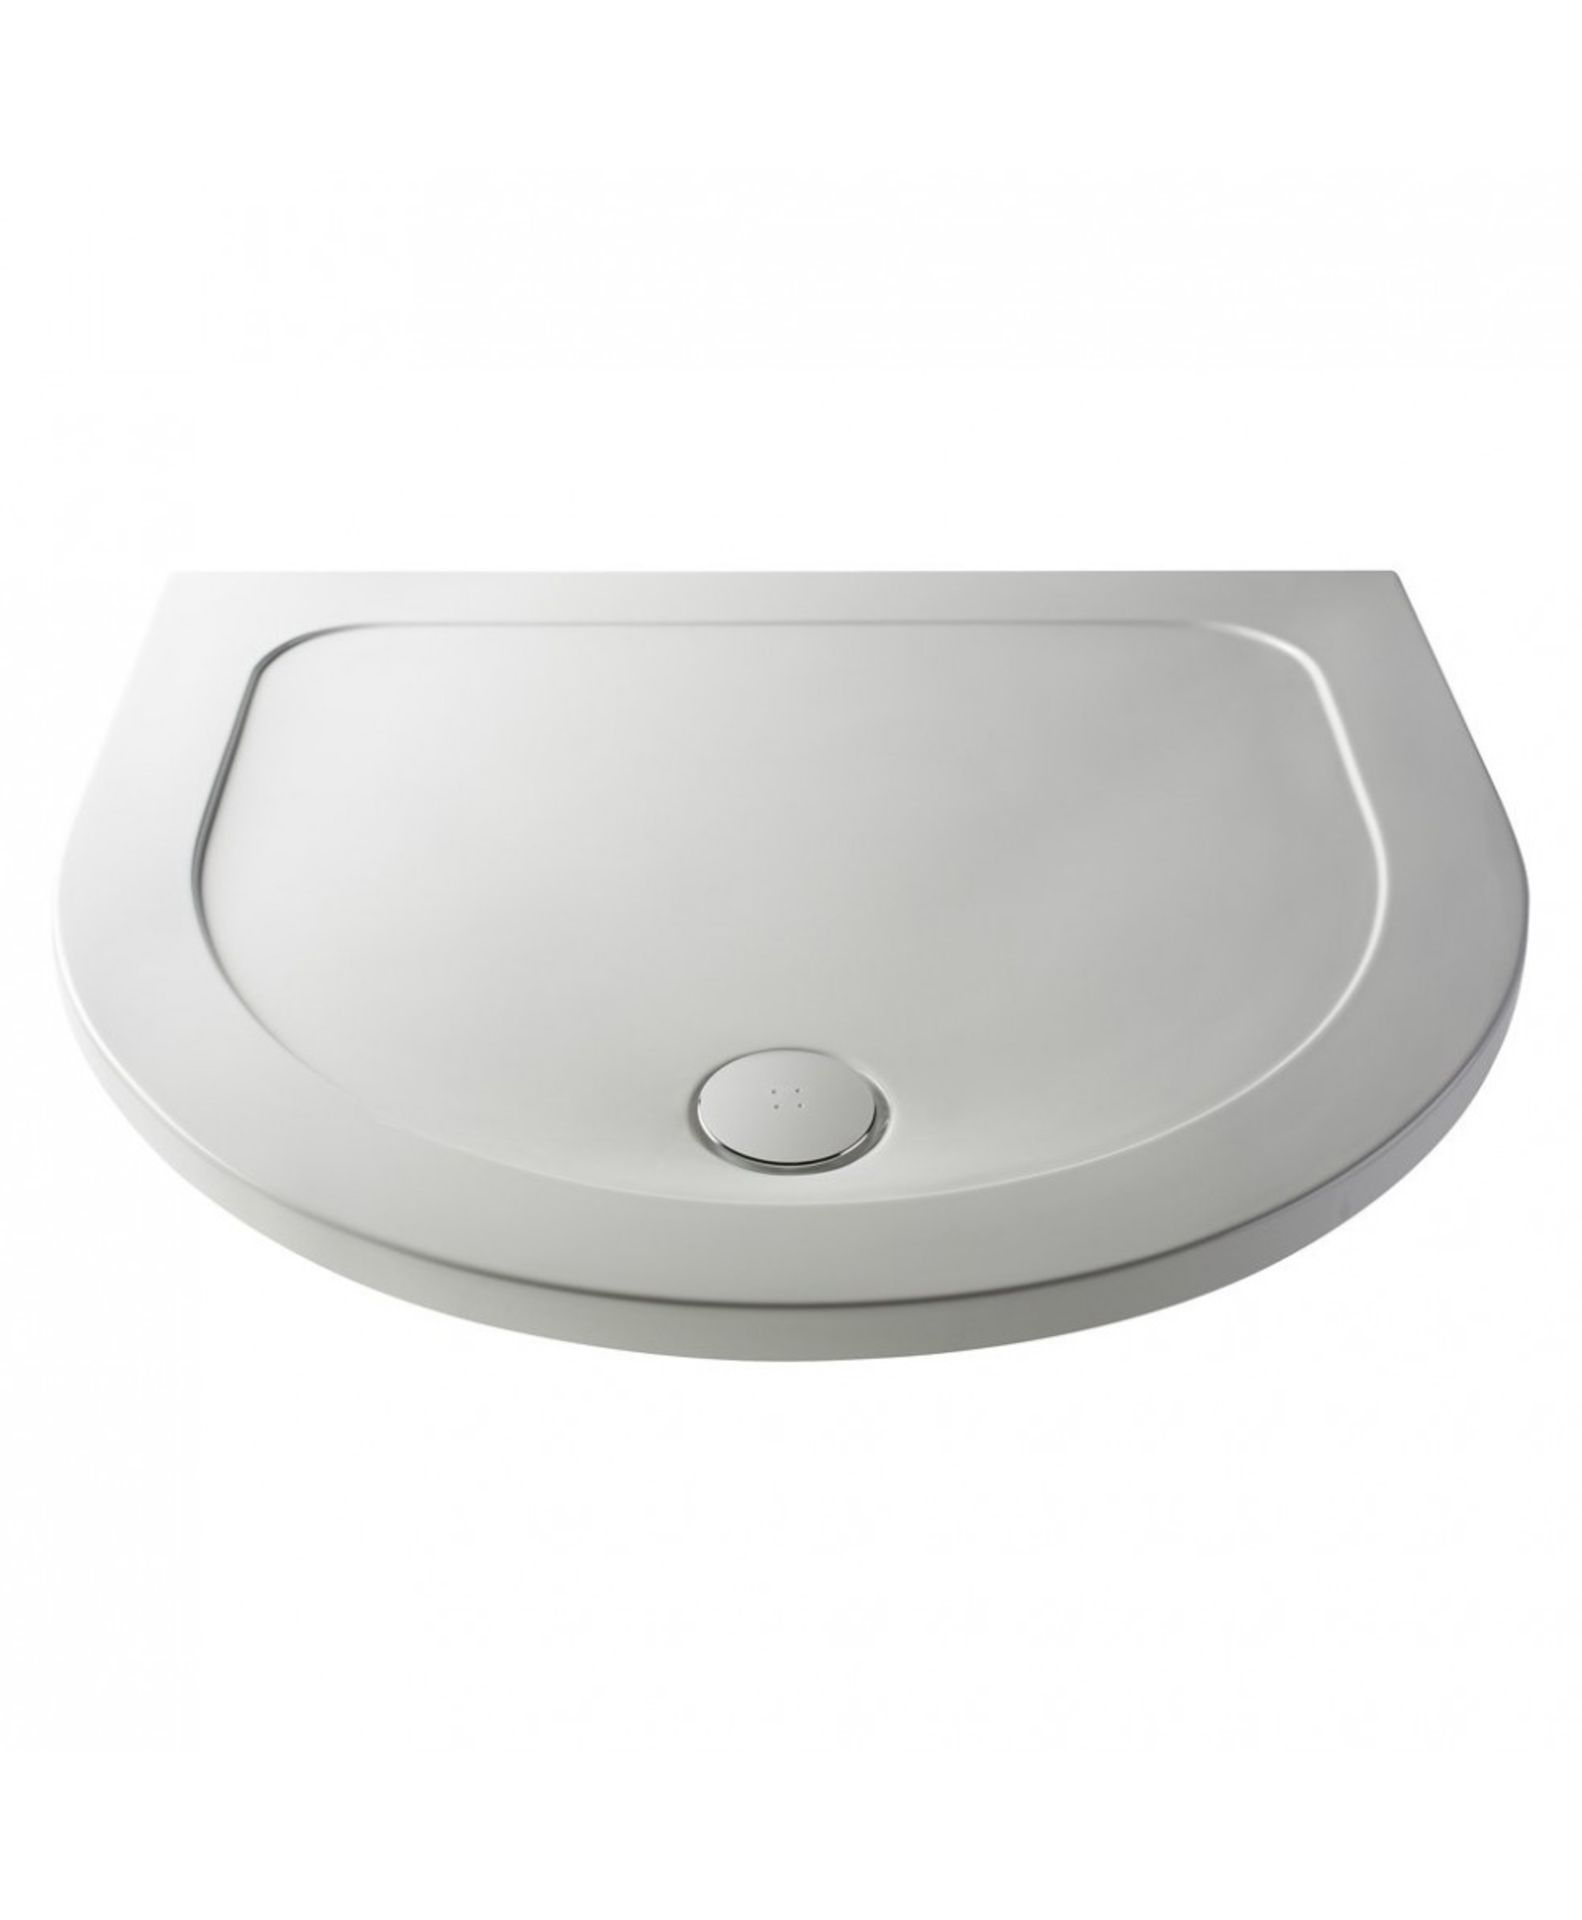 NEW (PC129) Twyfords 770mm Hydro D Shape White Shower tray.Low profile ultra slim design Gel co...